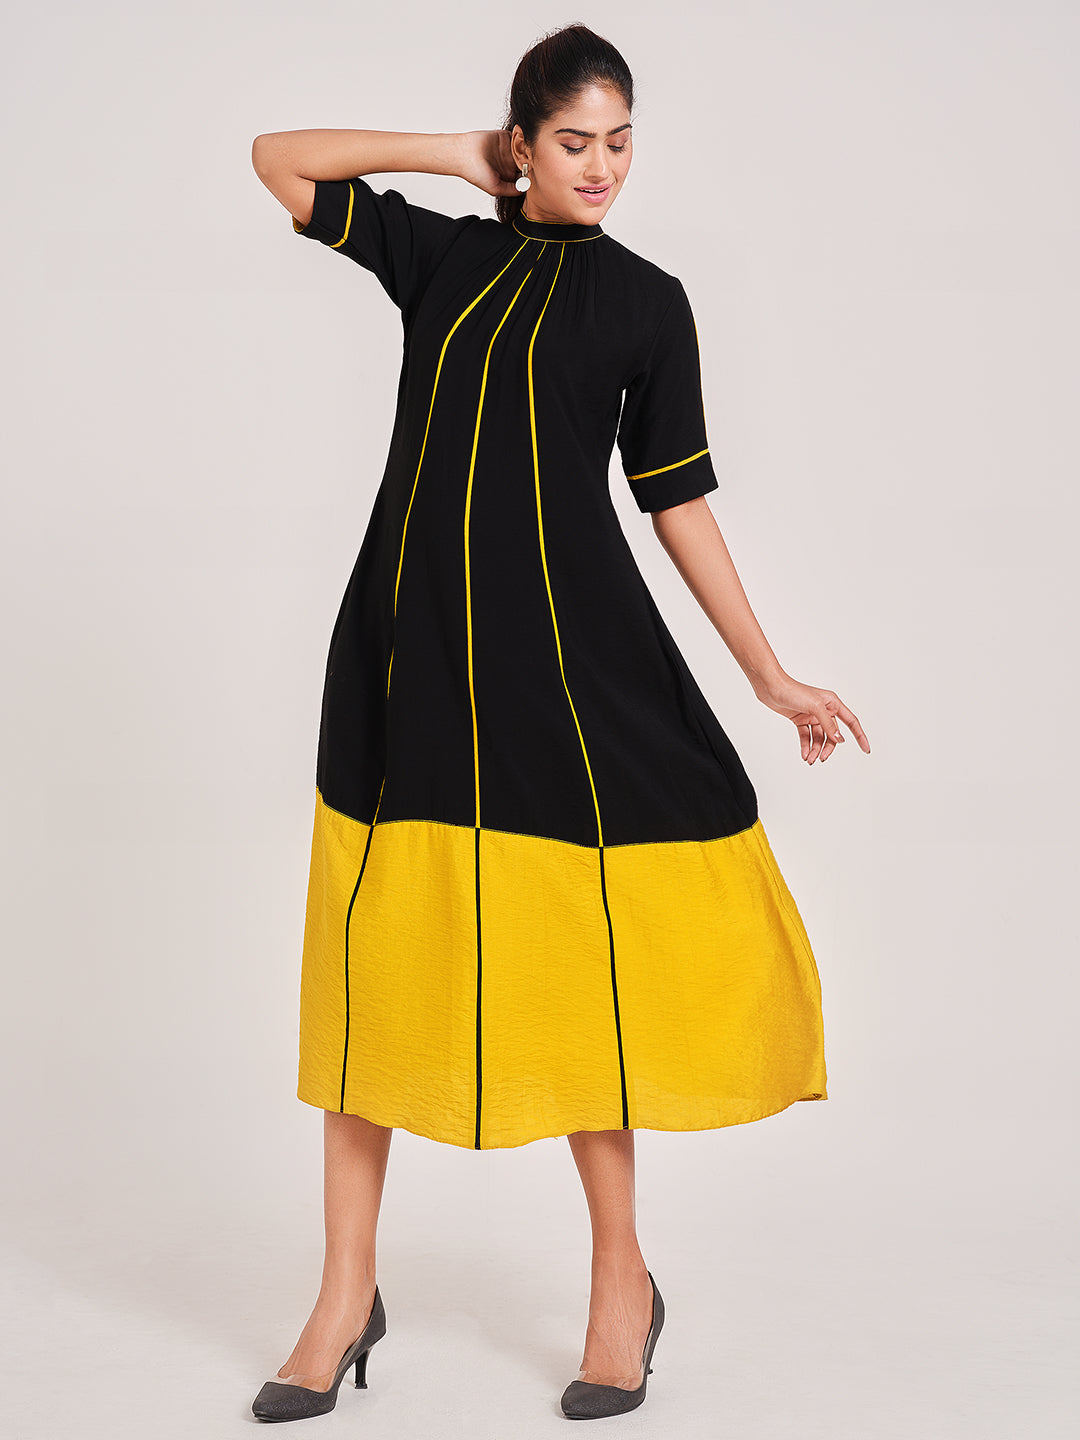 Black And Yellow Colourblock Flared Dress - ARH1019